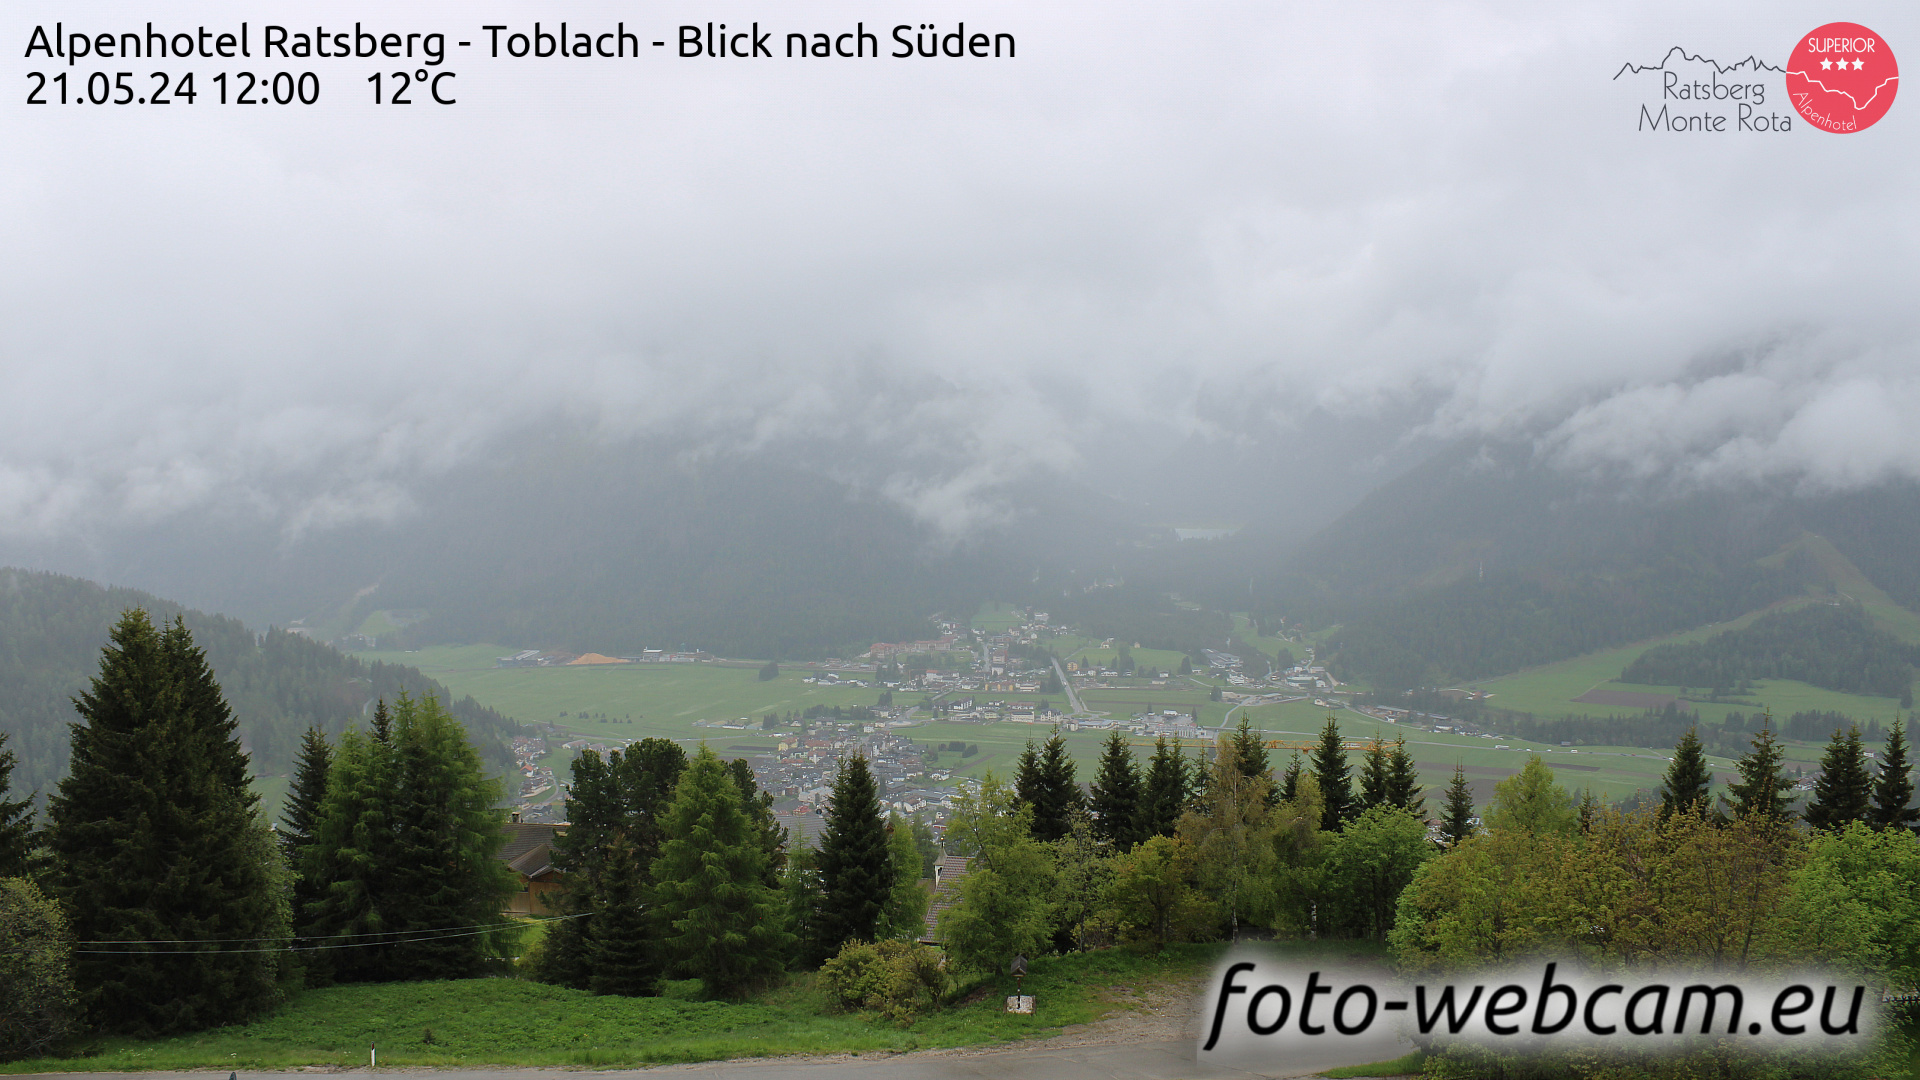 Toblach (Dolomitas) Dom. 12:03